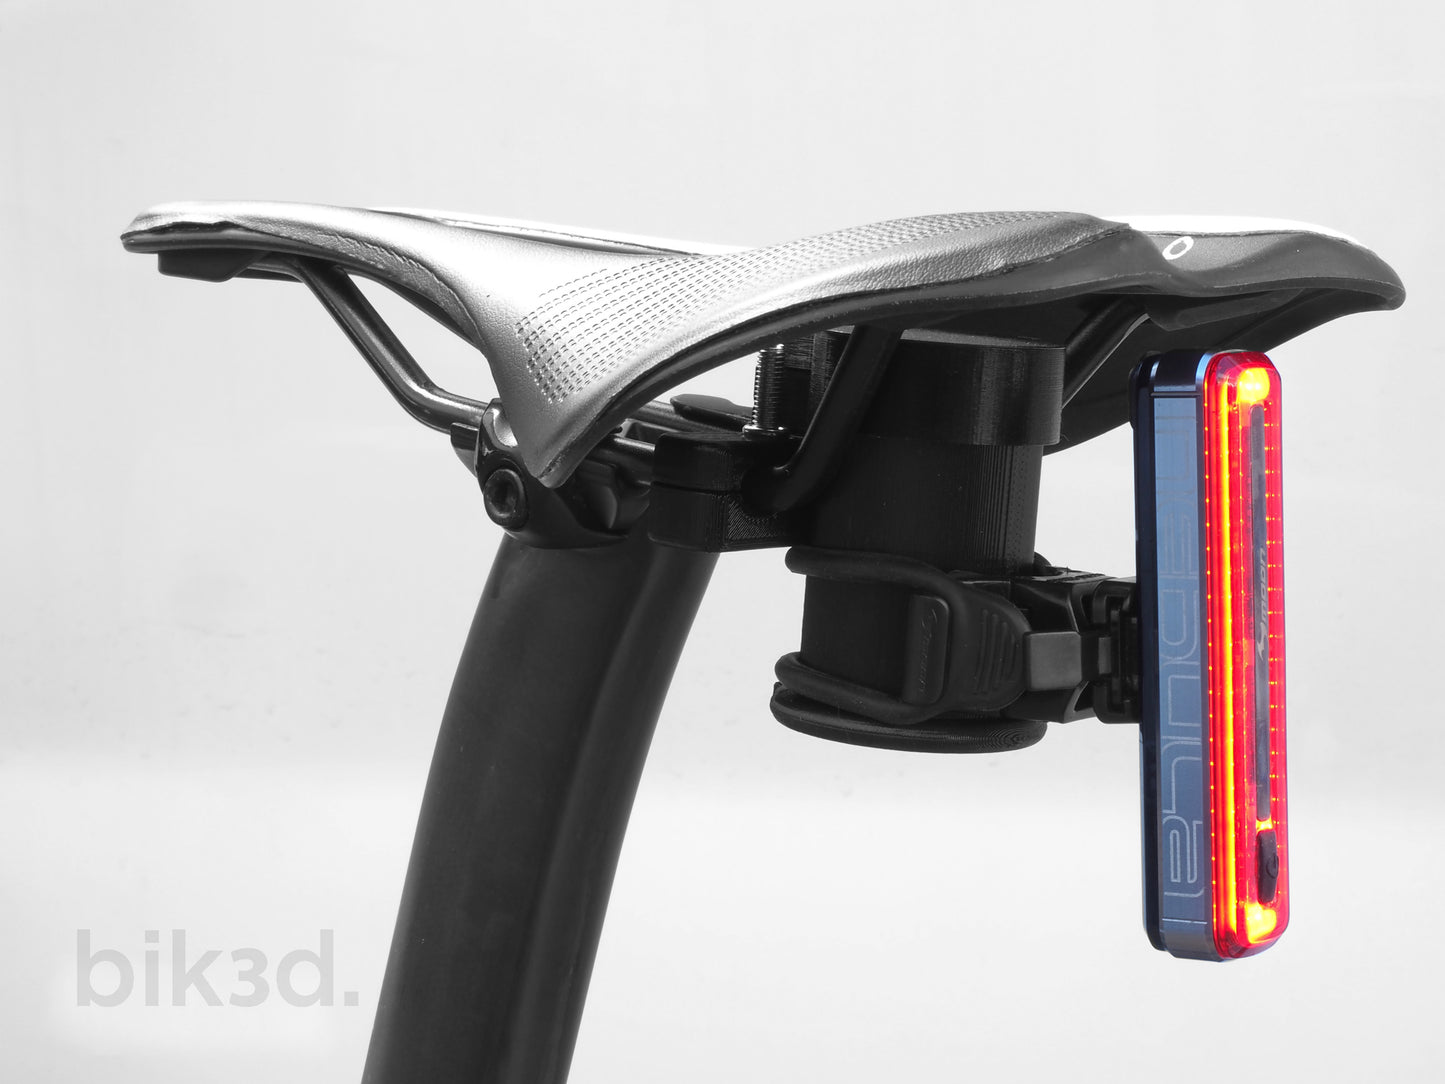 Galaxy SmartTag Under-Saddle Bike/Cycle Holder